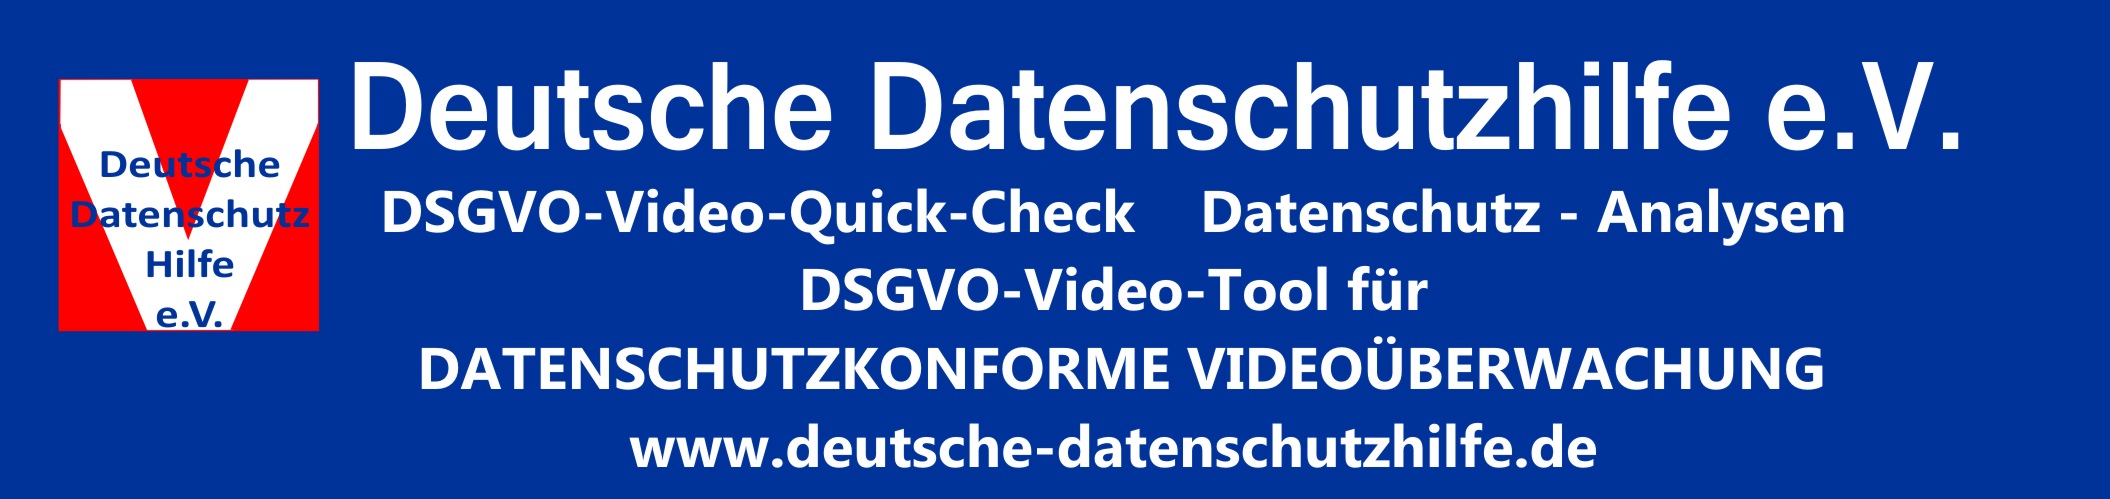 Deutsche-Datenschutzhilfe e.V.